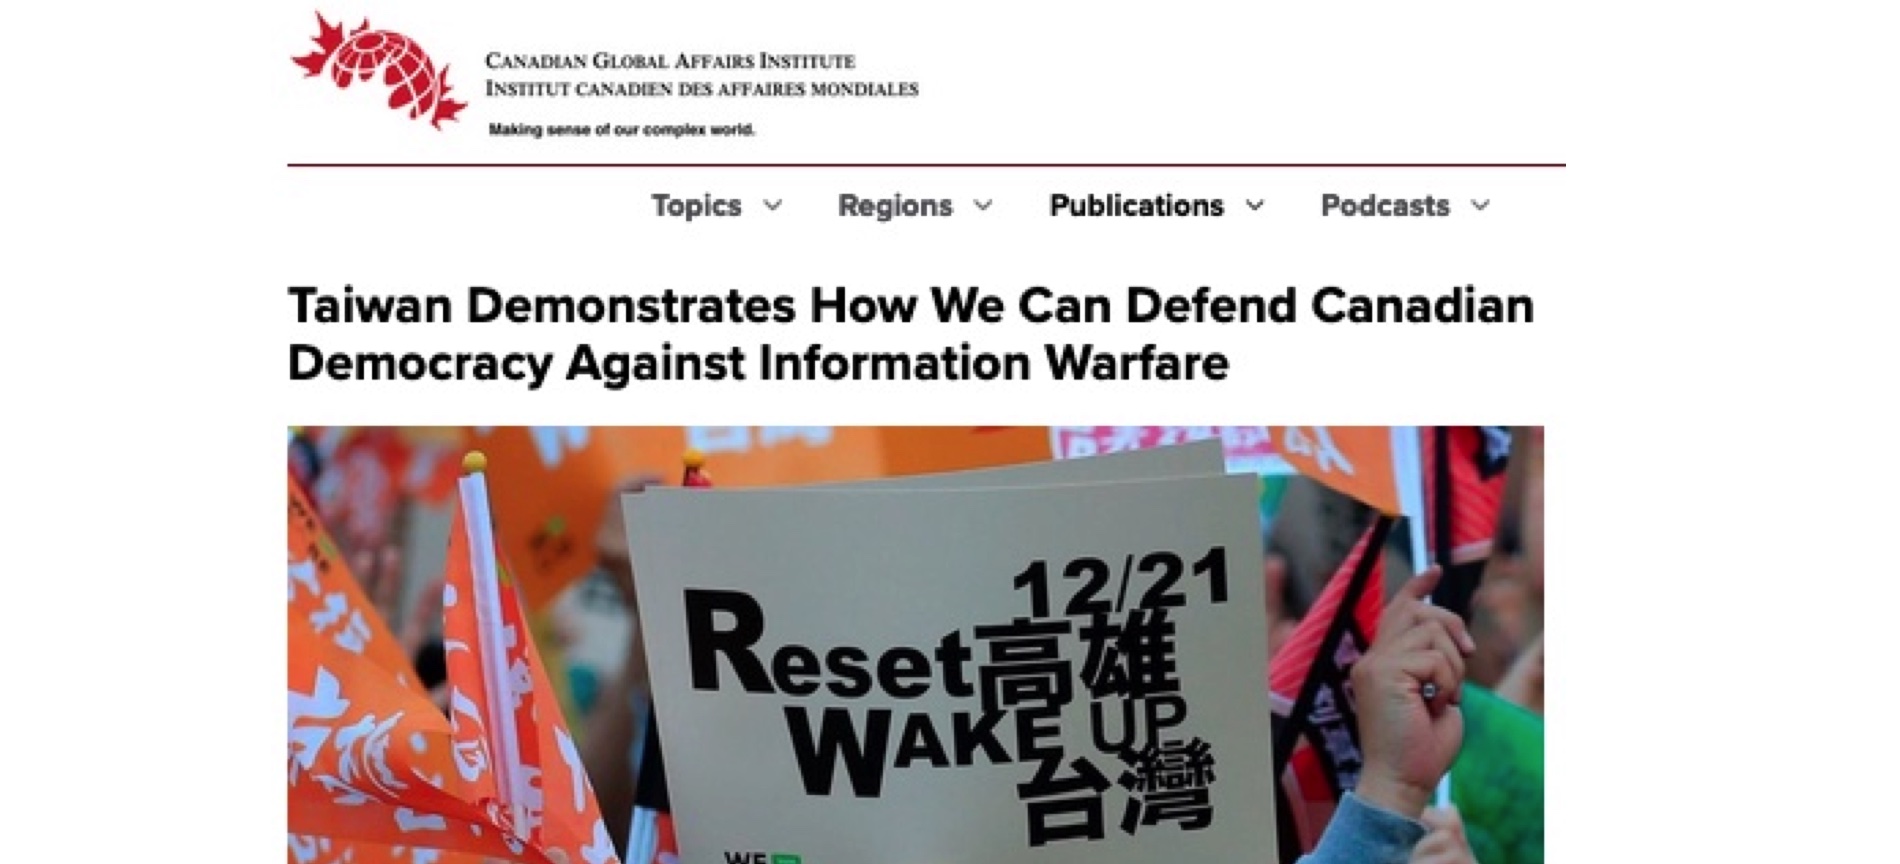 KOLGA: Taiwan Demonstrates How We Can Defend Canadian Democracy Against Information Warfare